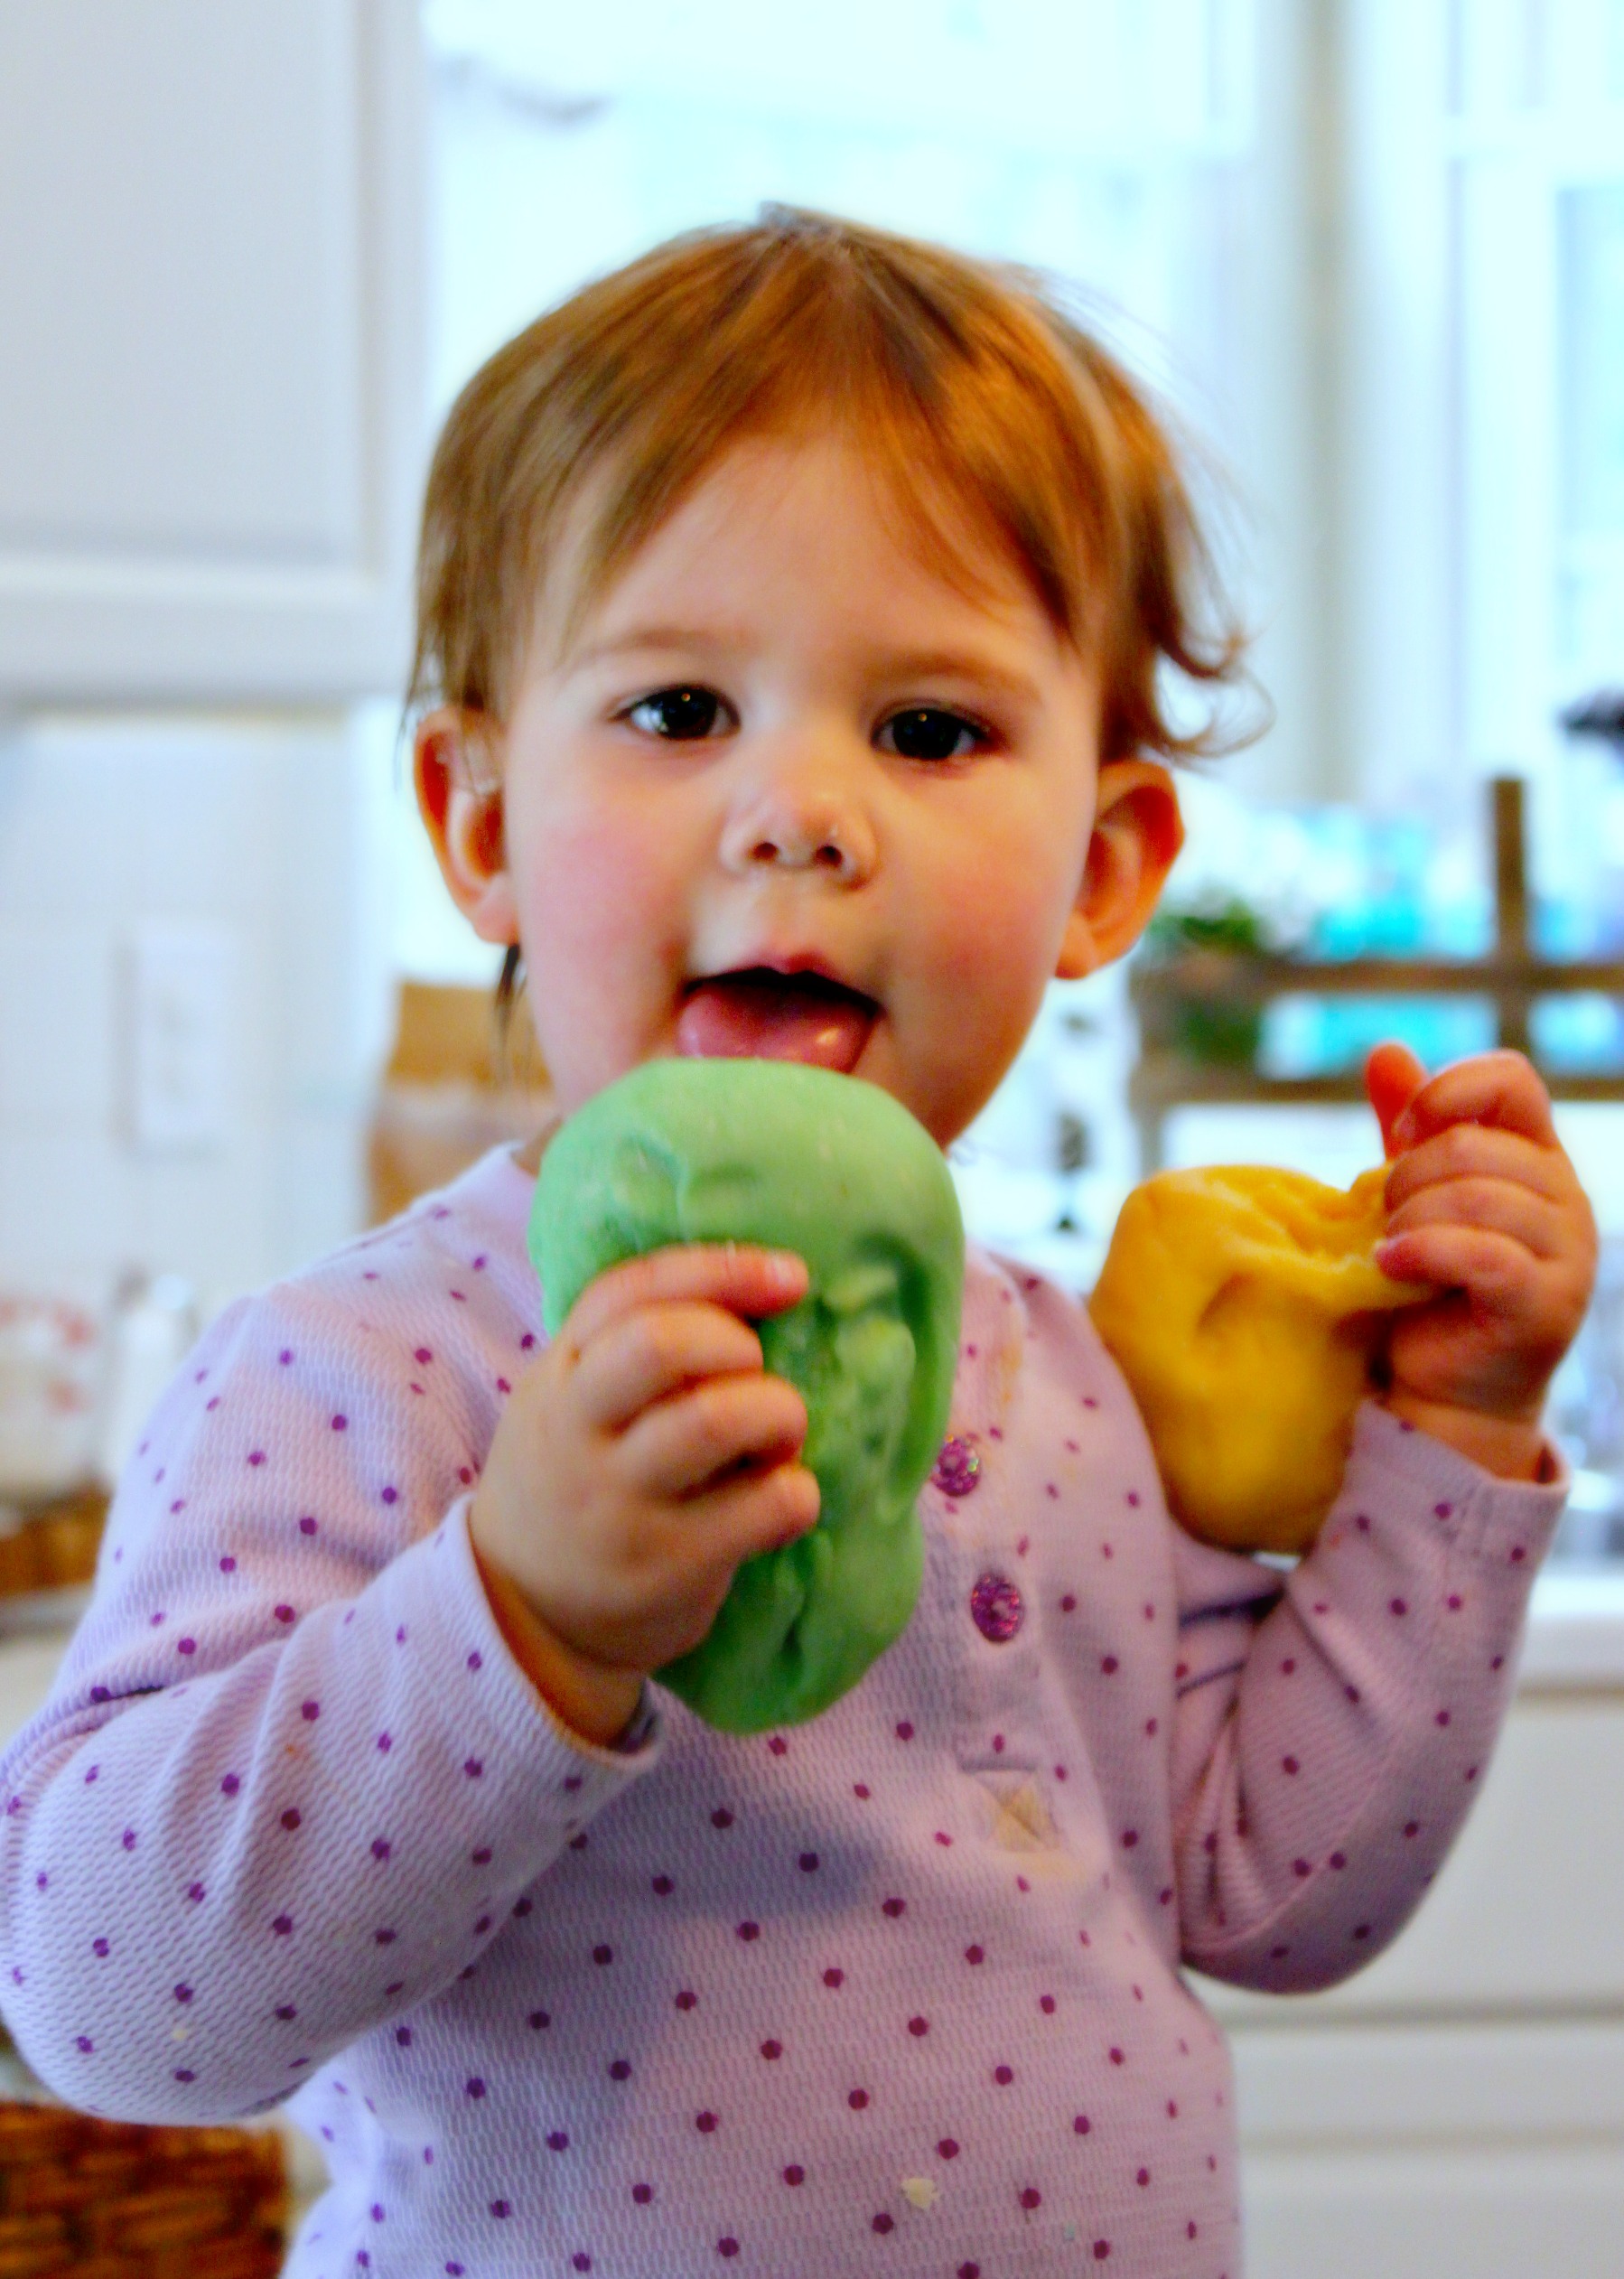 My kid eats Play-doh. (an all natural 